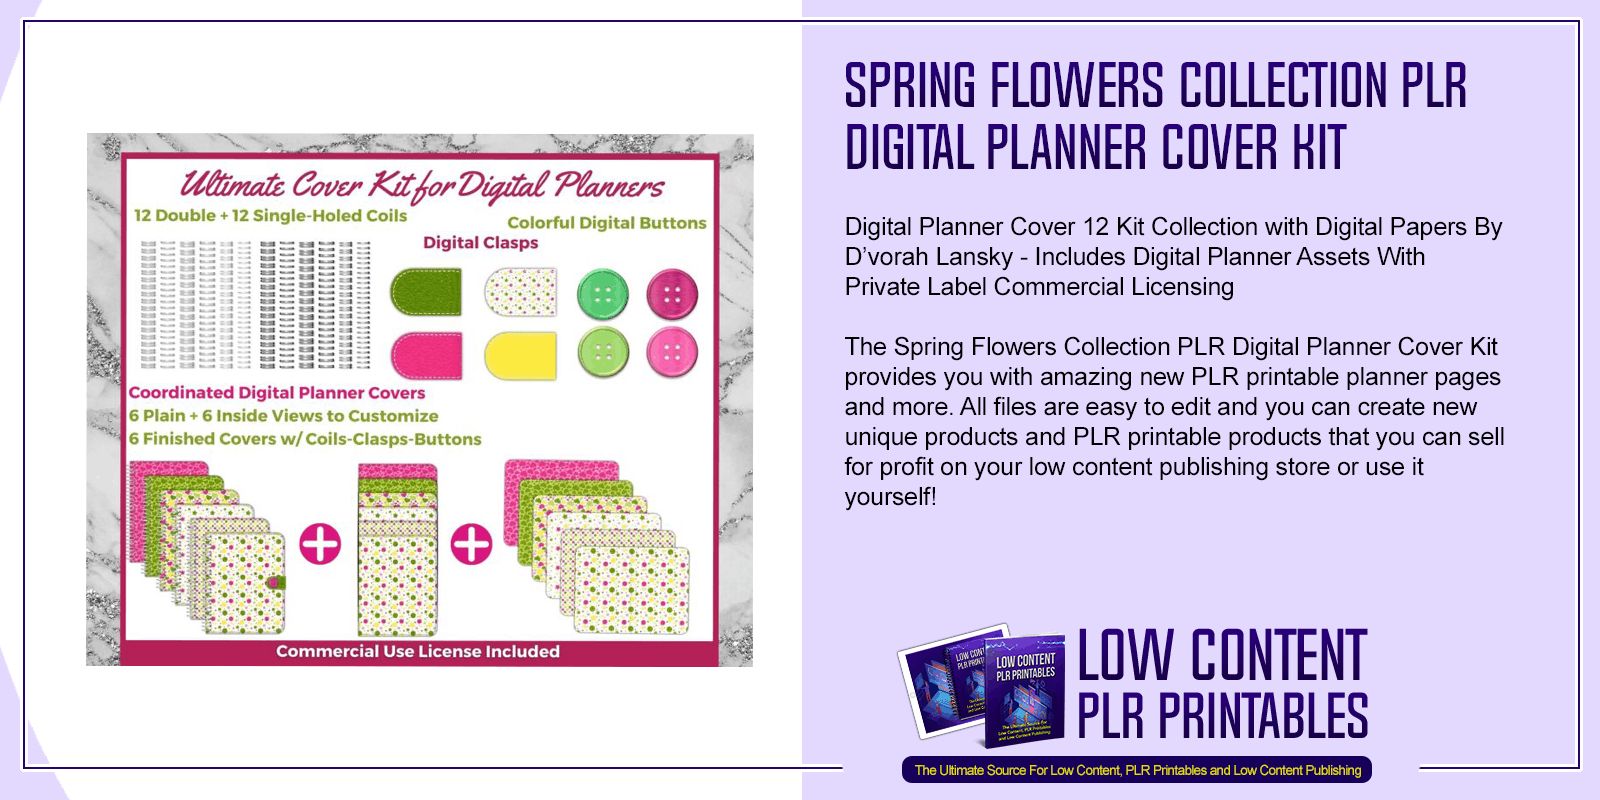 Spring Flowers Collection PLR Digital Planner Cover Kit